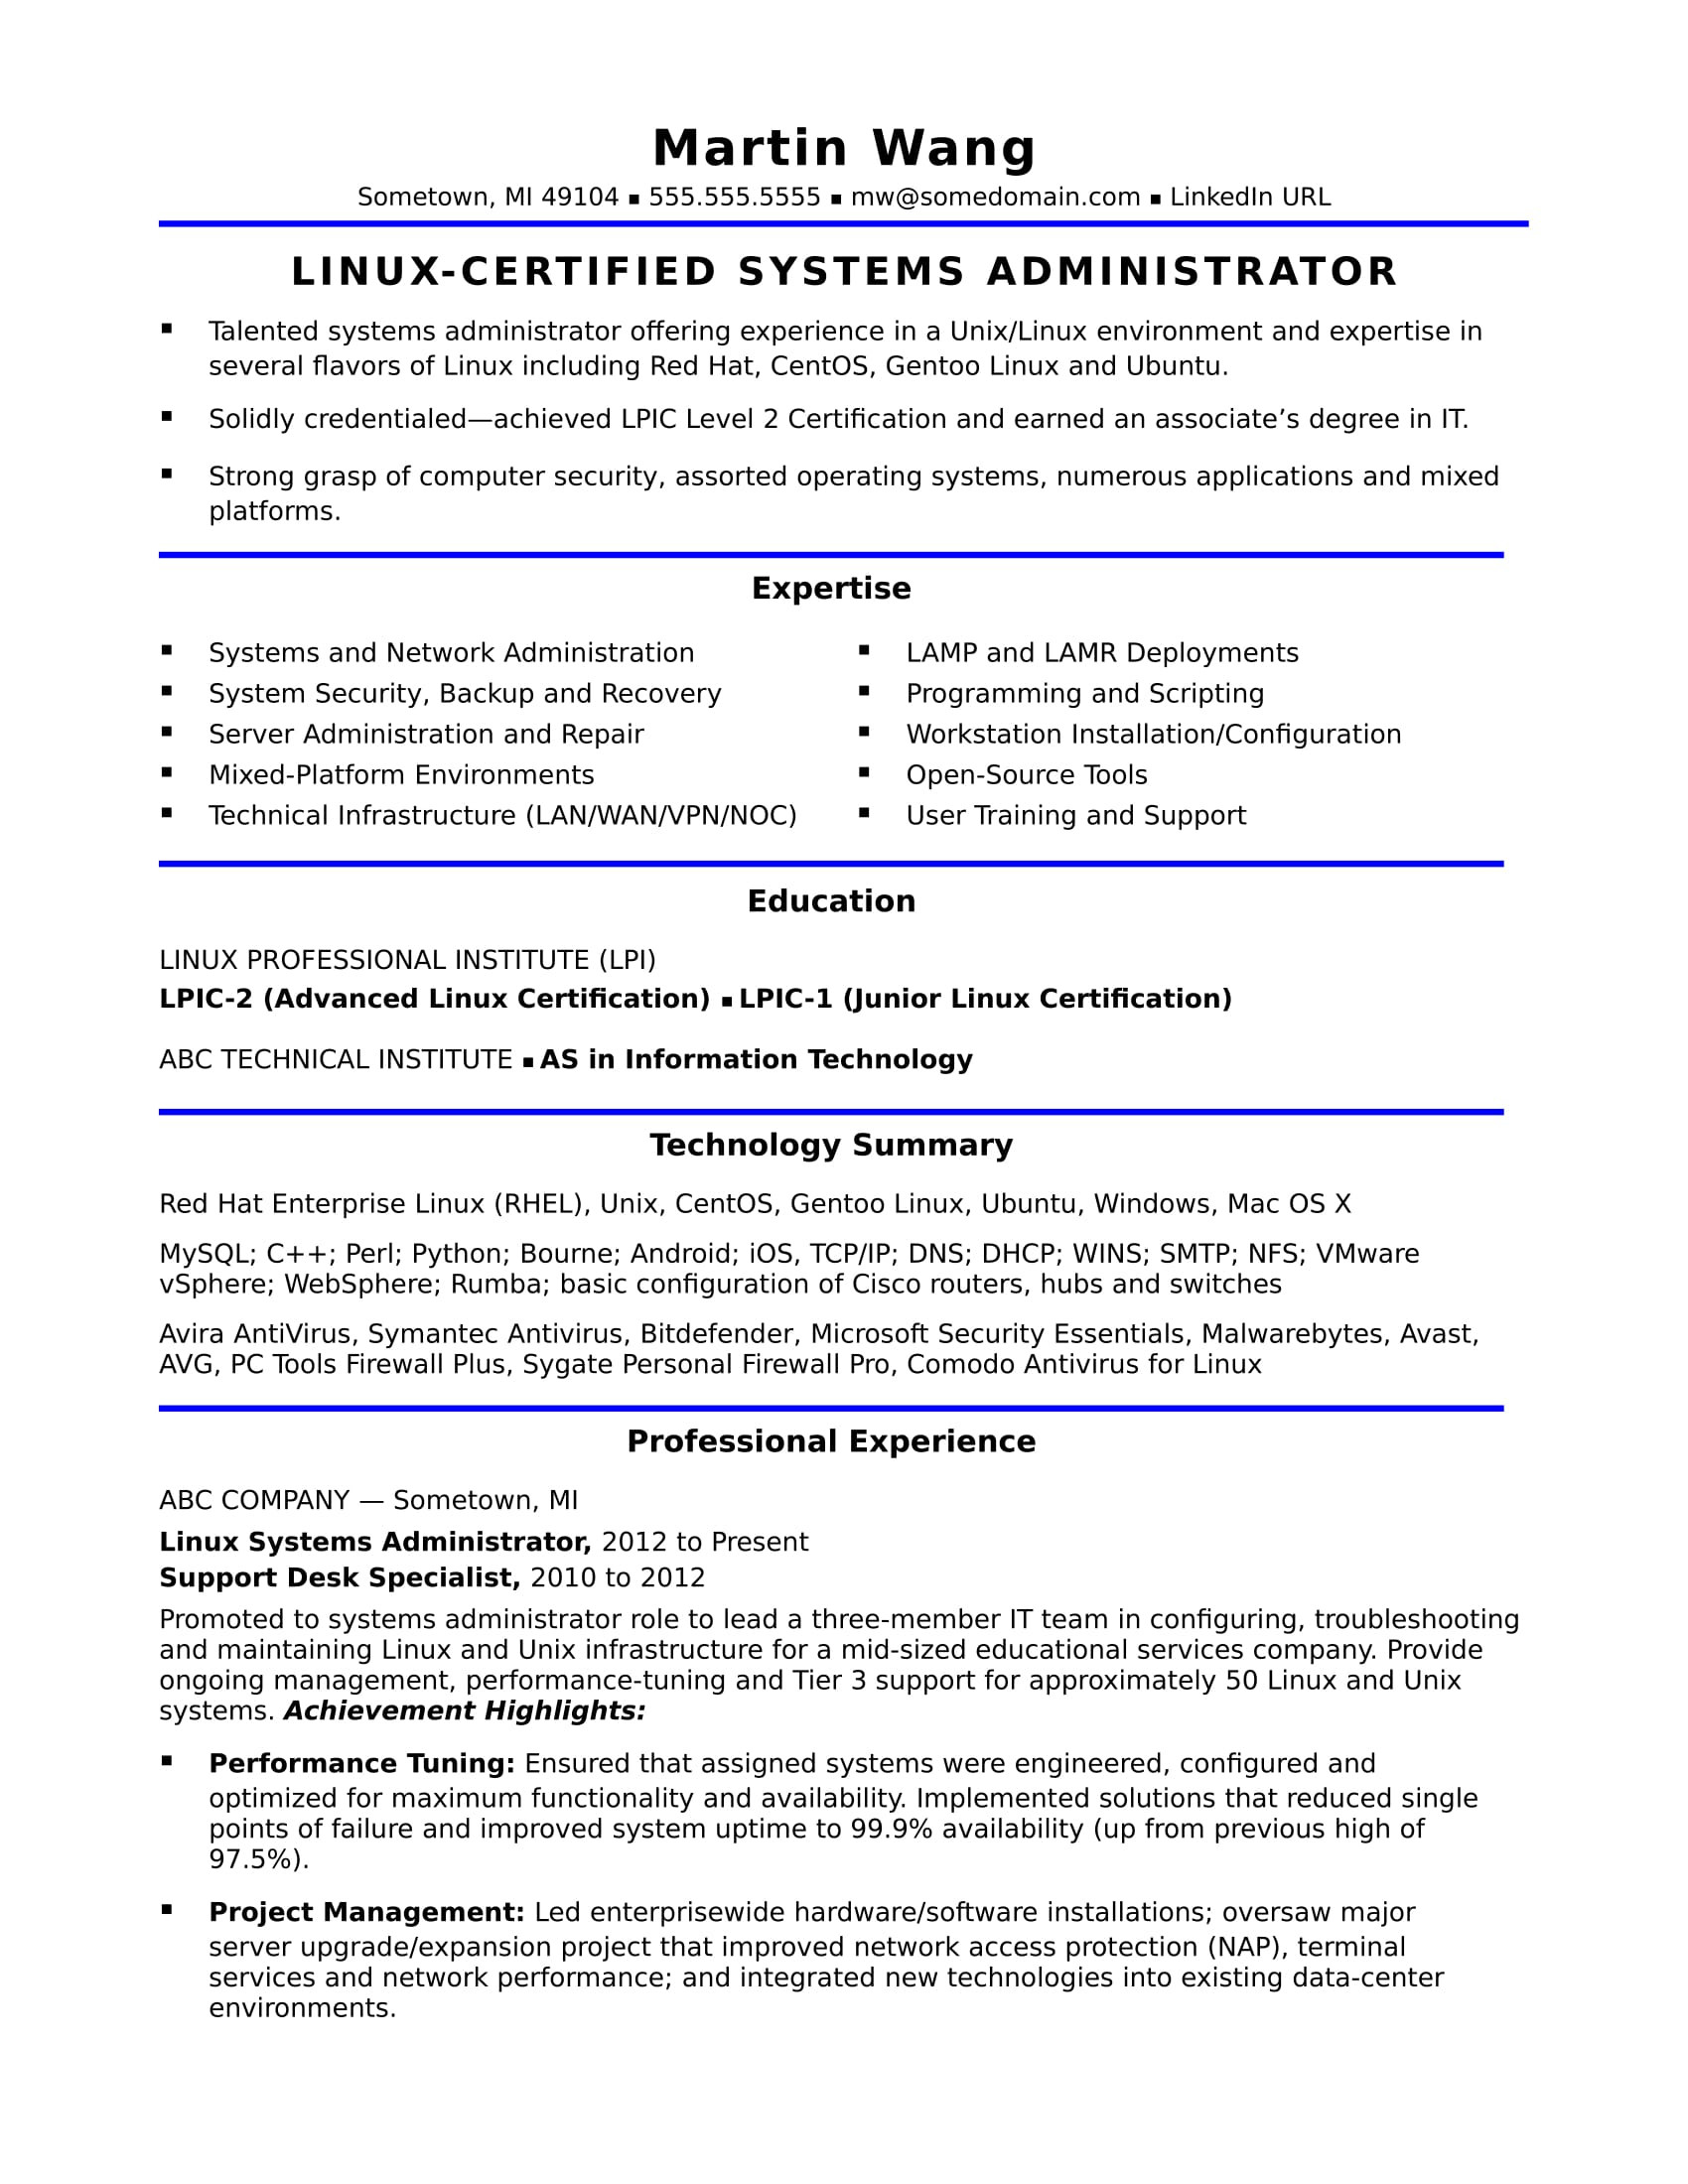 Desktop Technician Jr Admin Sample Resume Sample Resume for A Midlevel Systems Administrator Monster.com